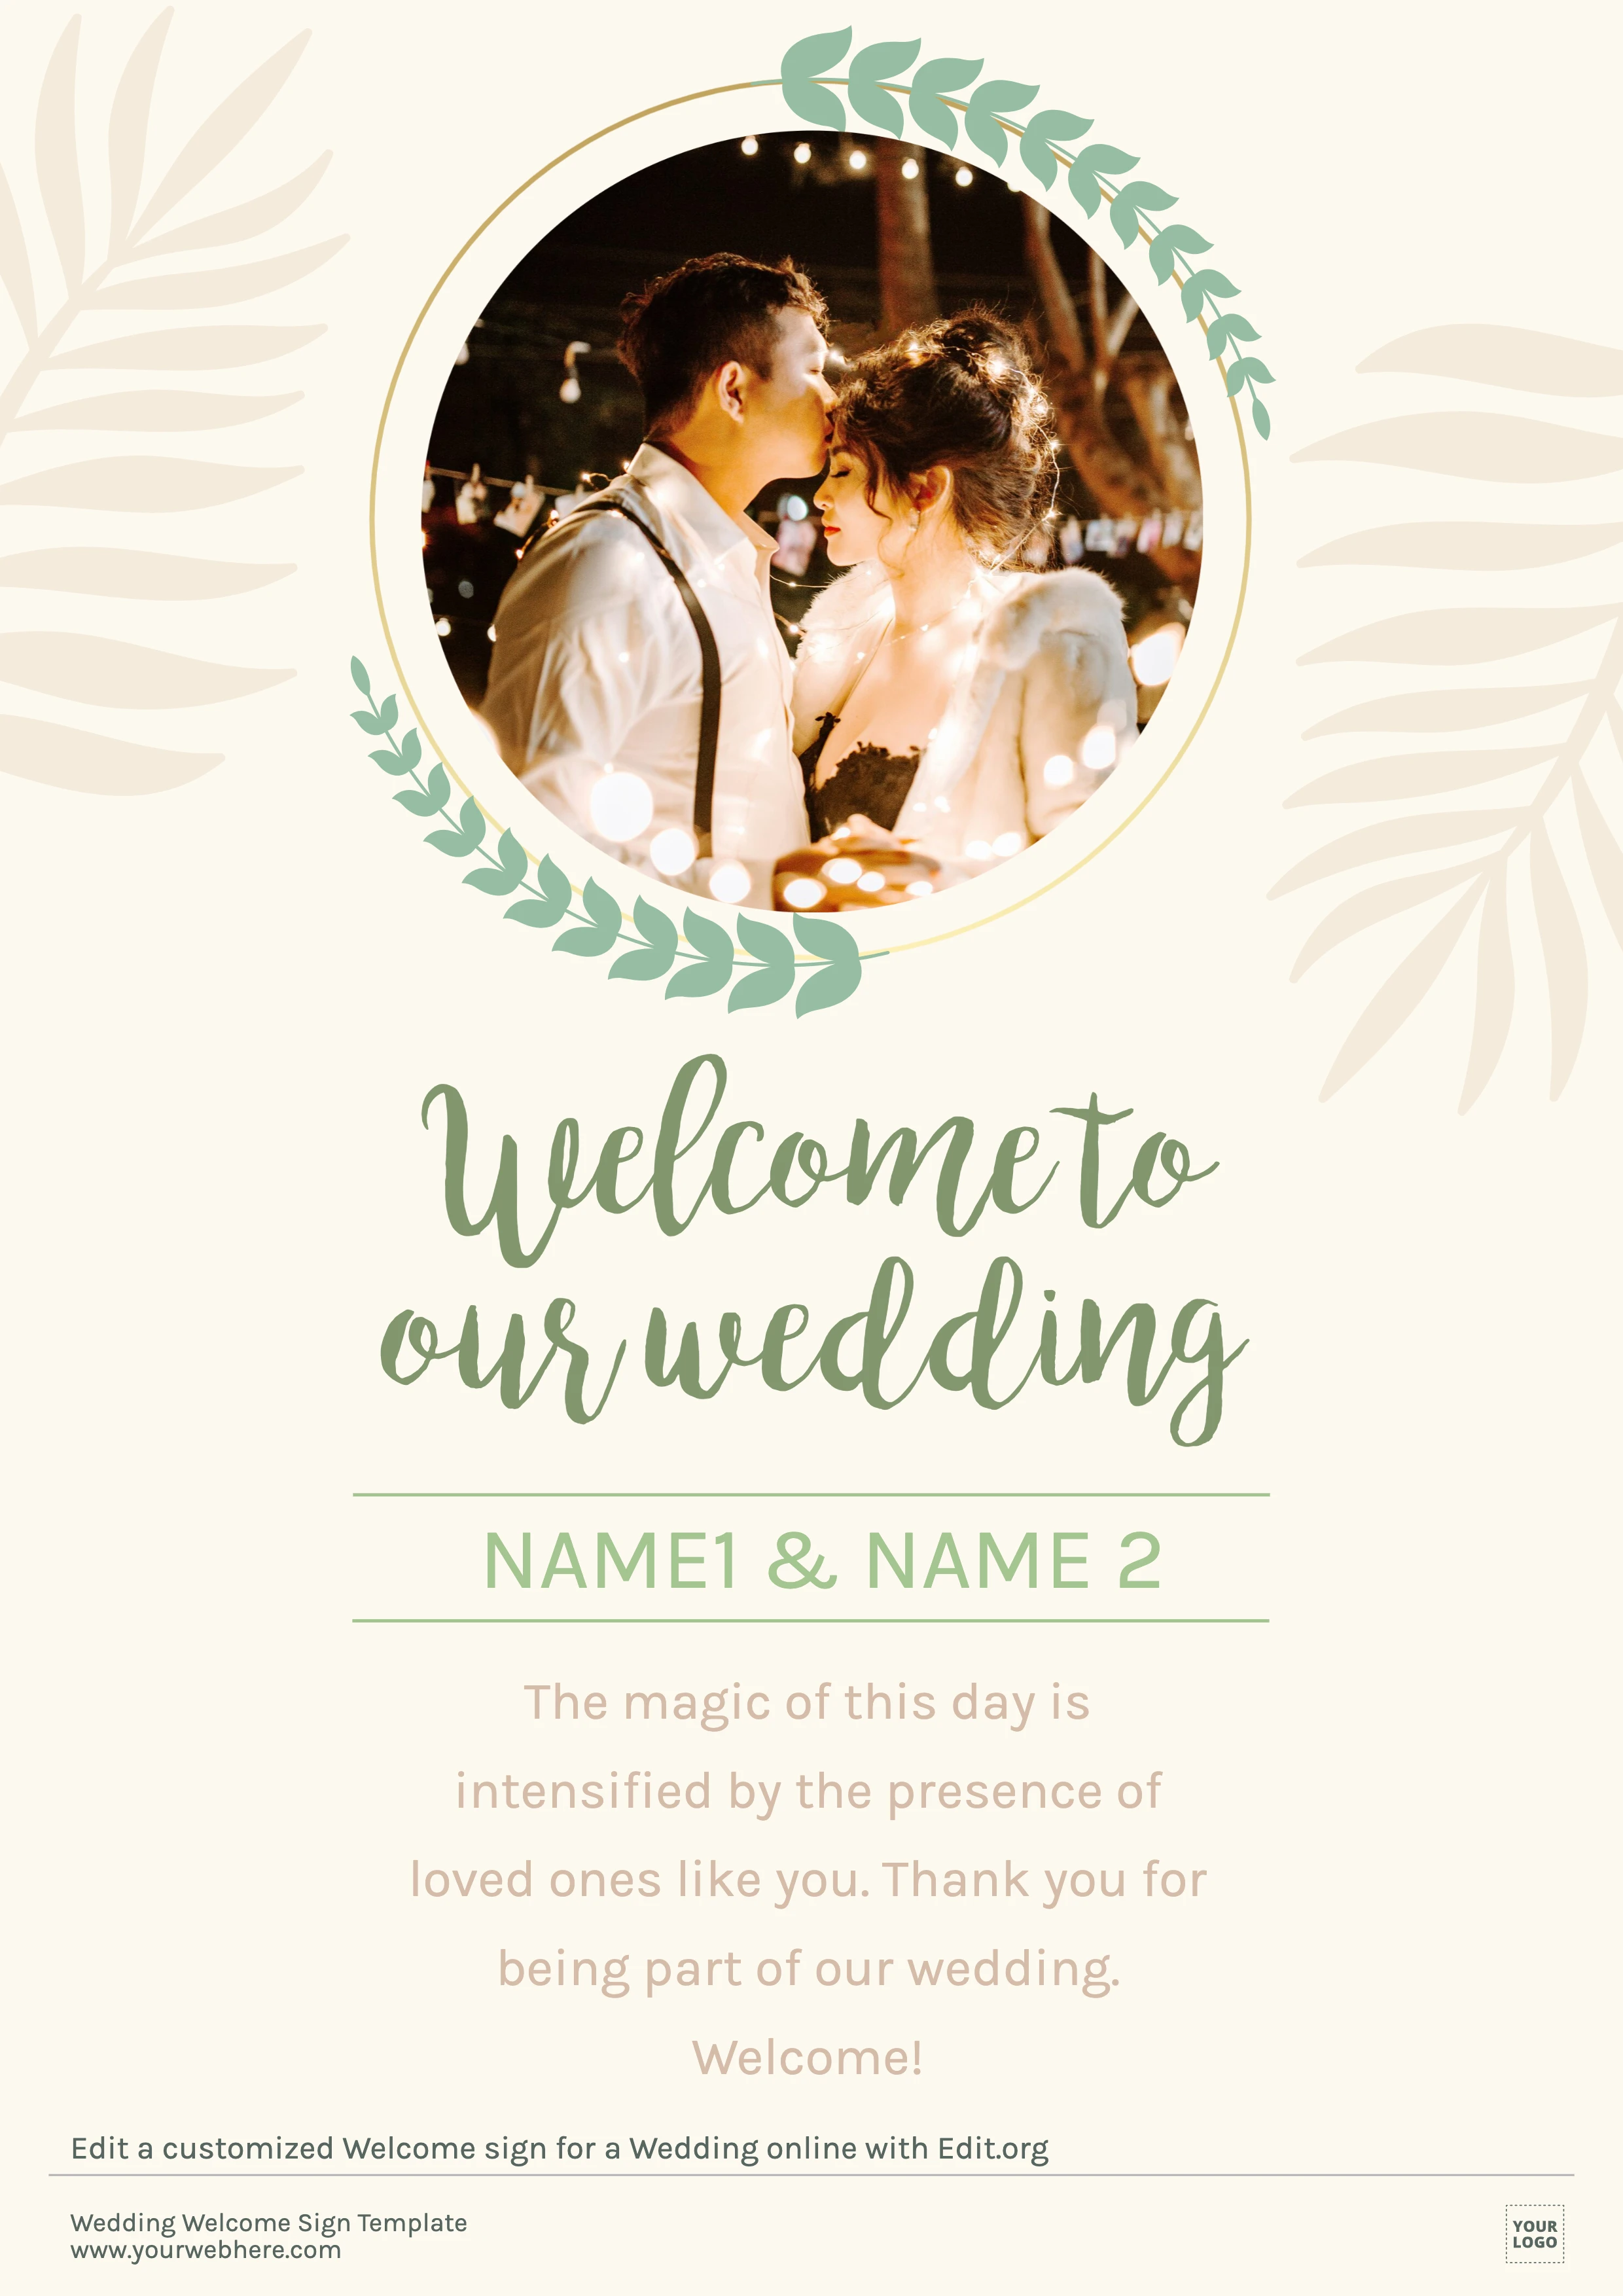 Custom Wedding Welcome sign template to print